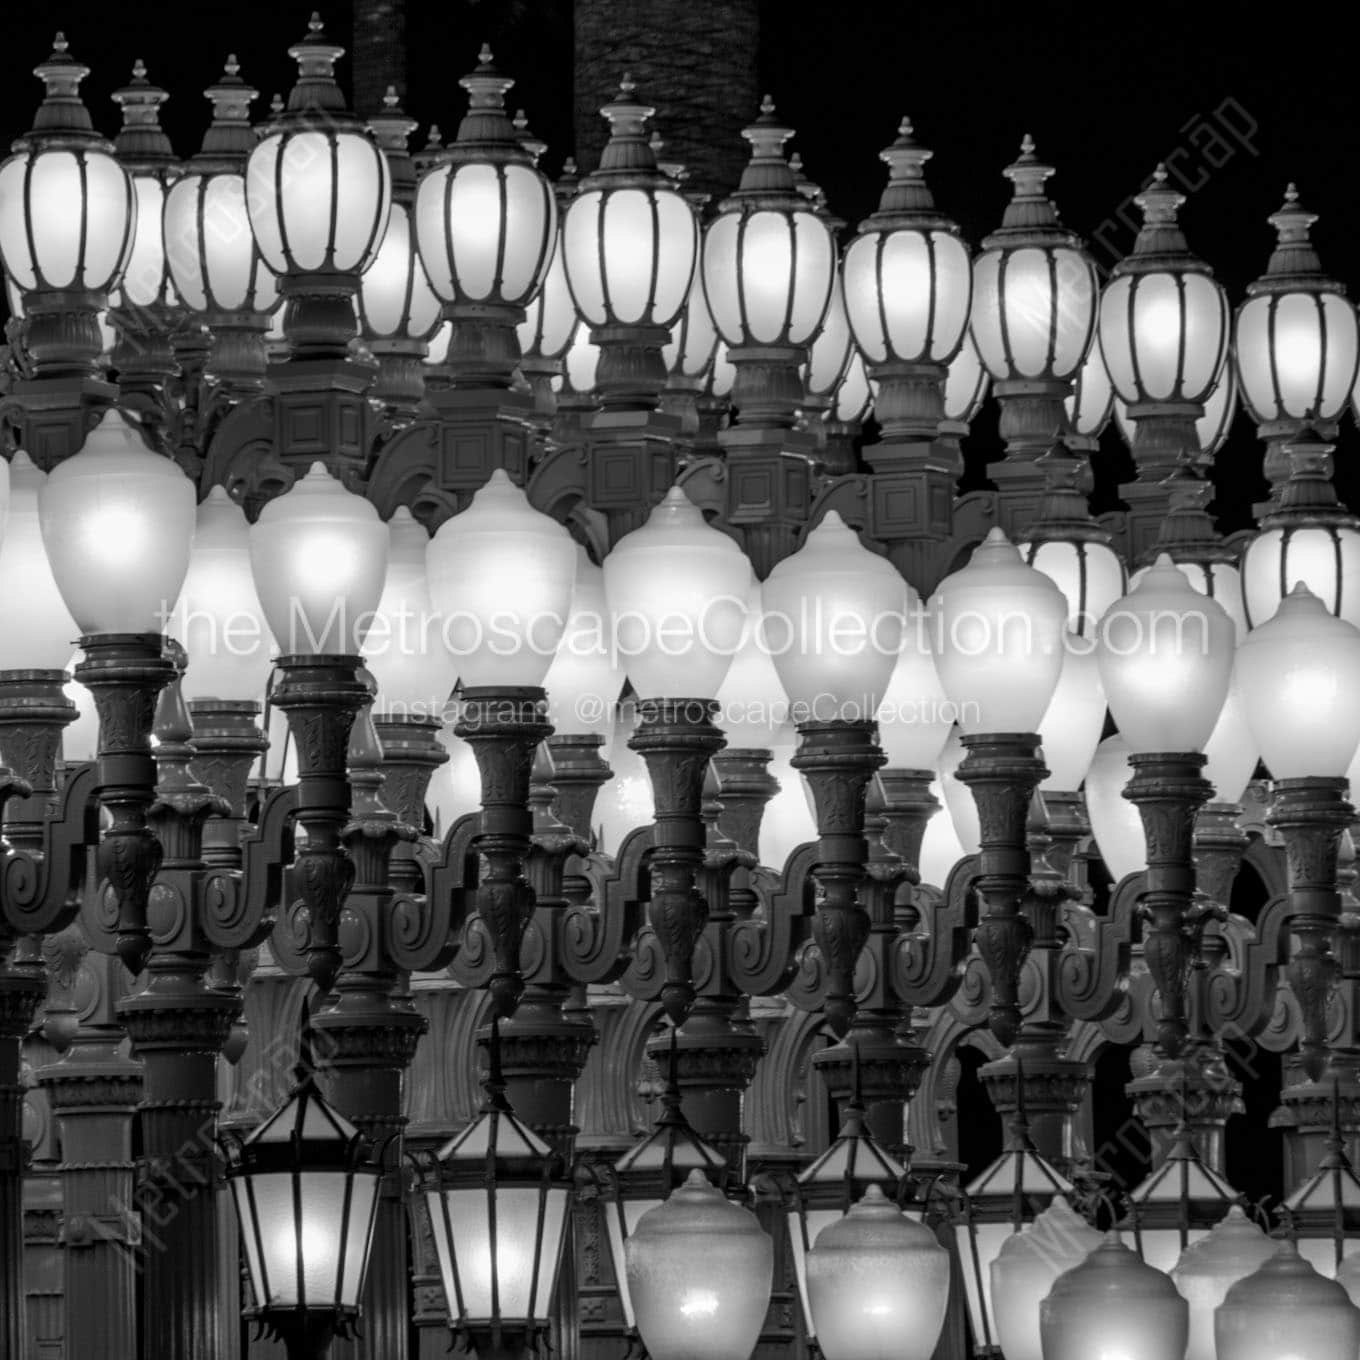 lacma lamps close up Black & White Office Art